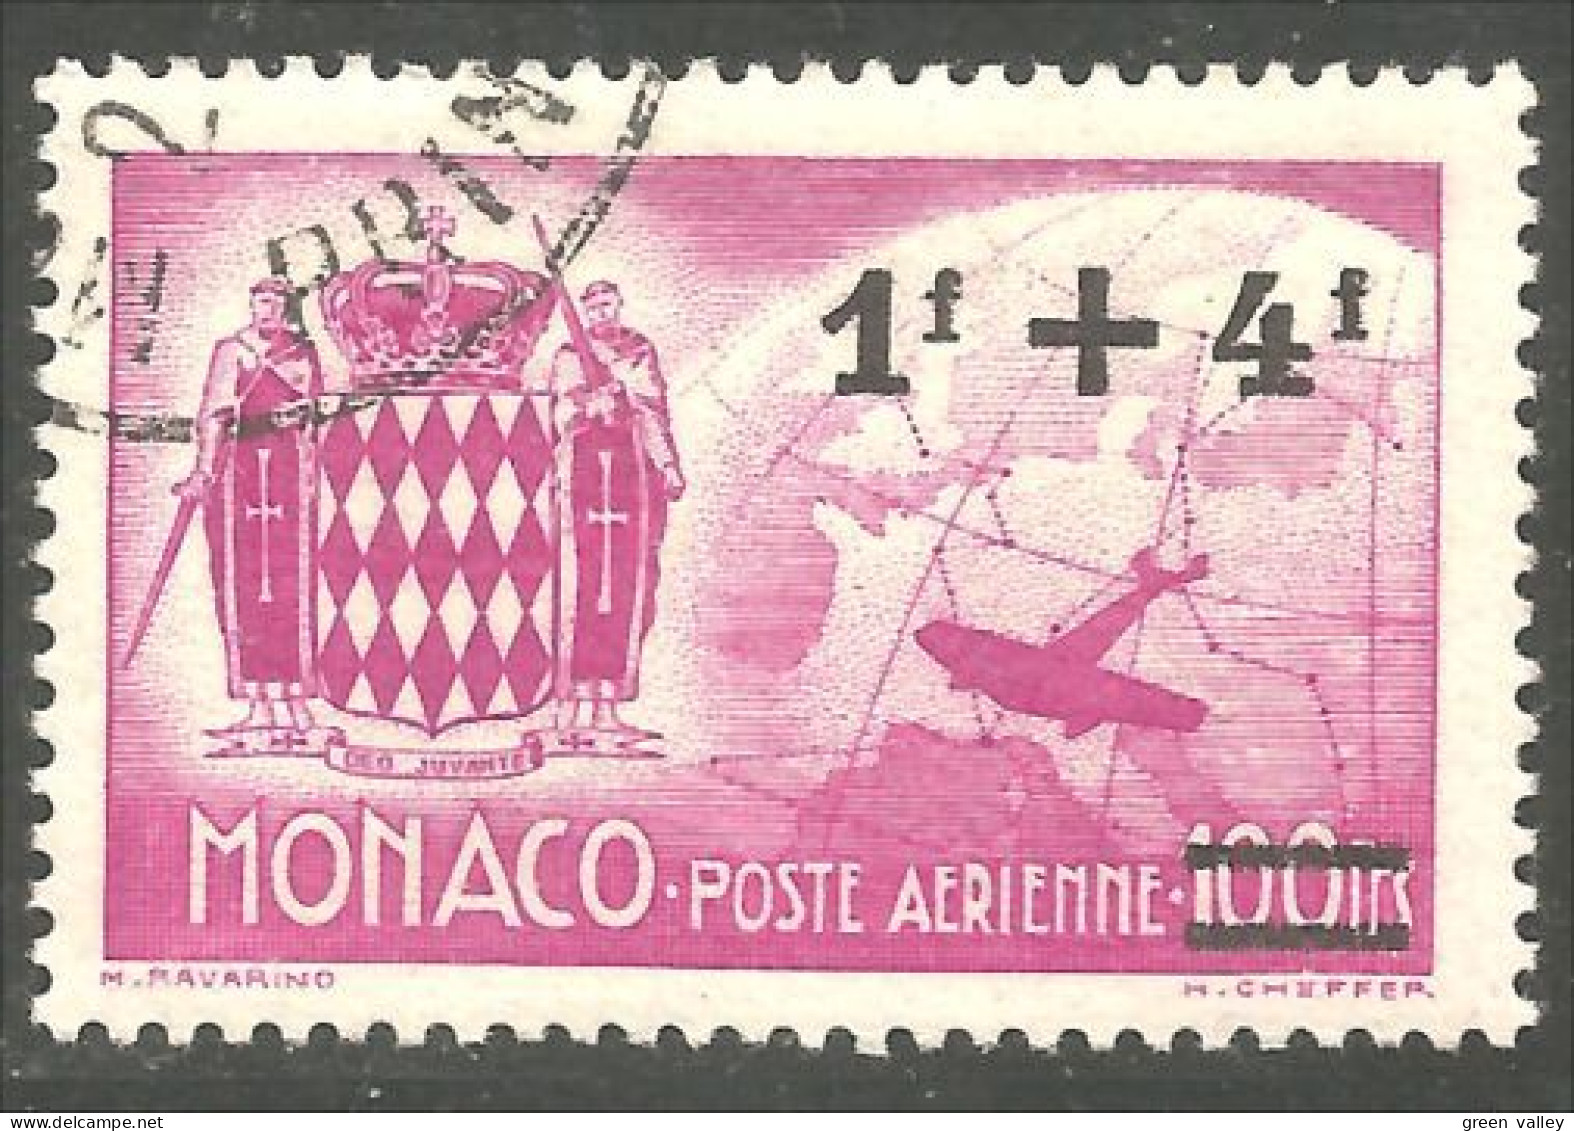 630x Monaco Armoiries Coat Of Arms Surcharge (MON-585) - Briefmarken